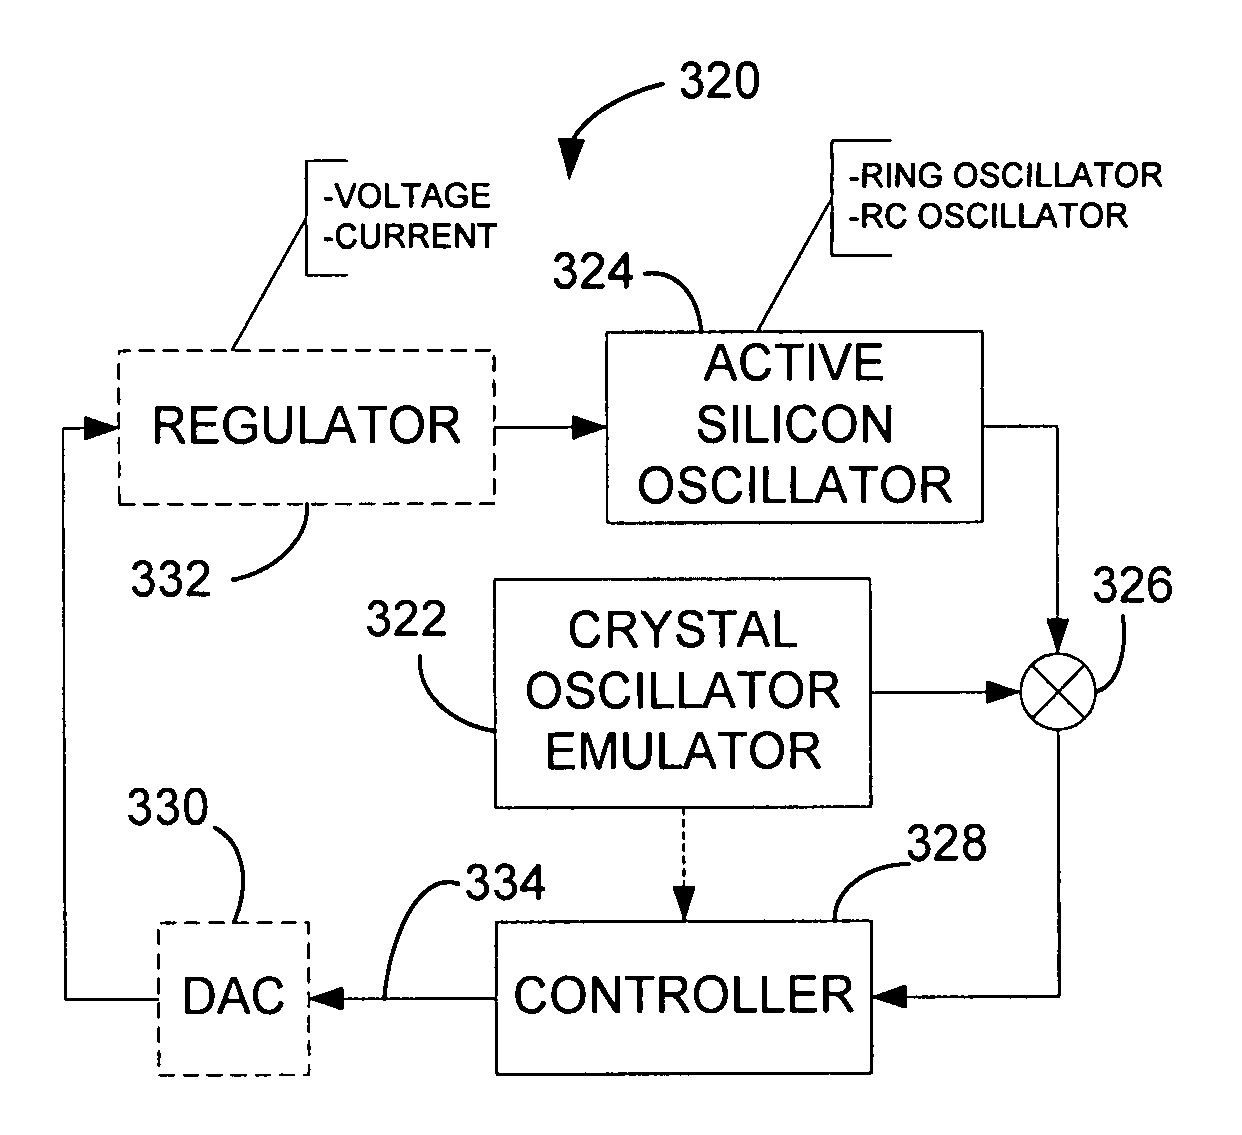 Crystal oscillator emulator